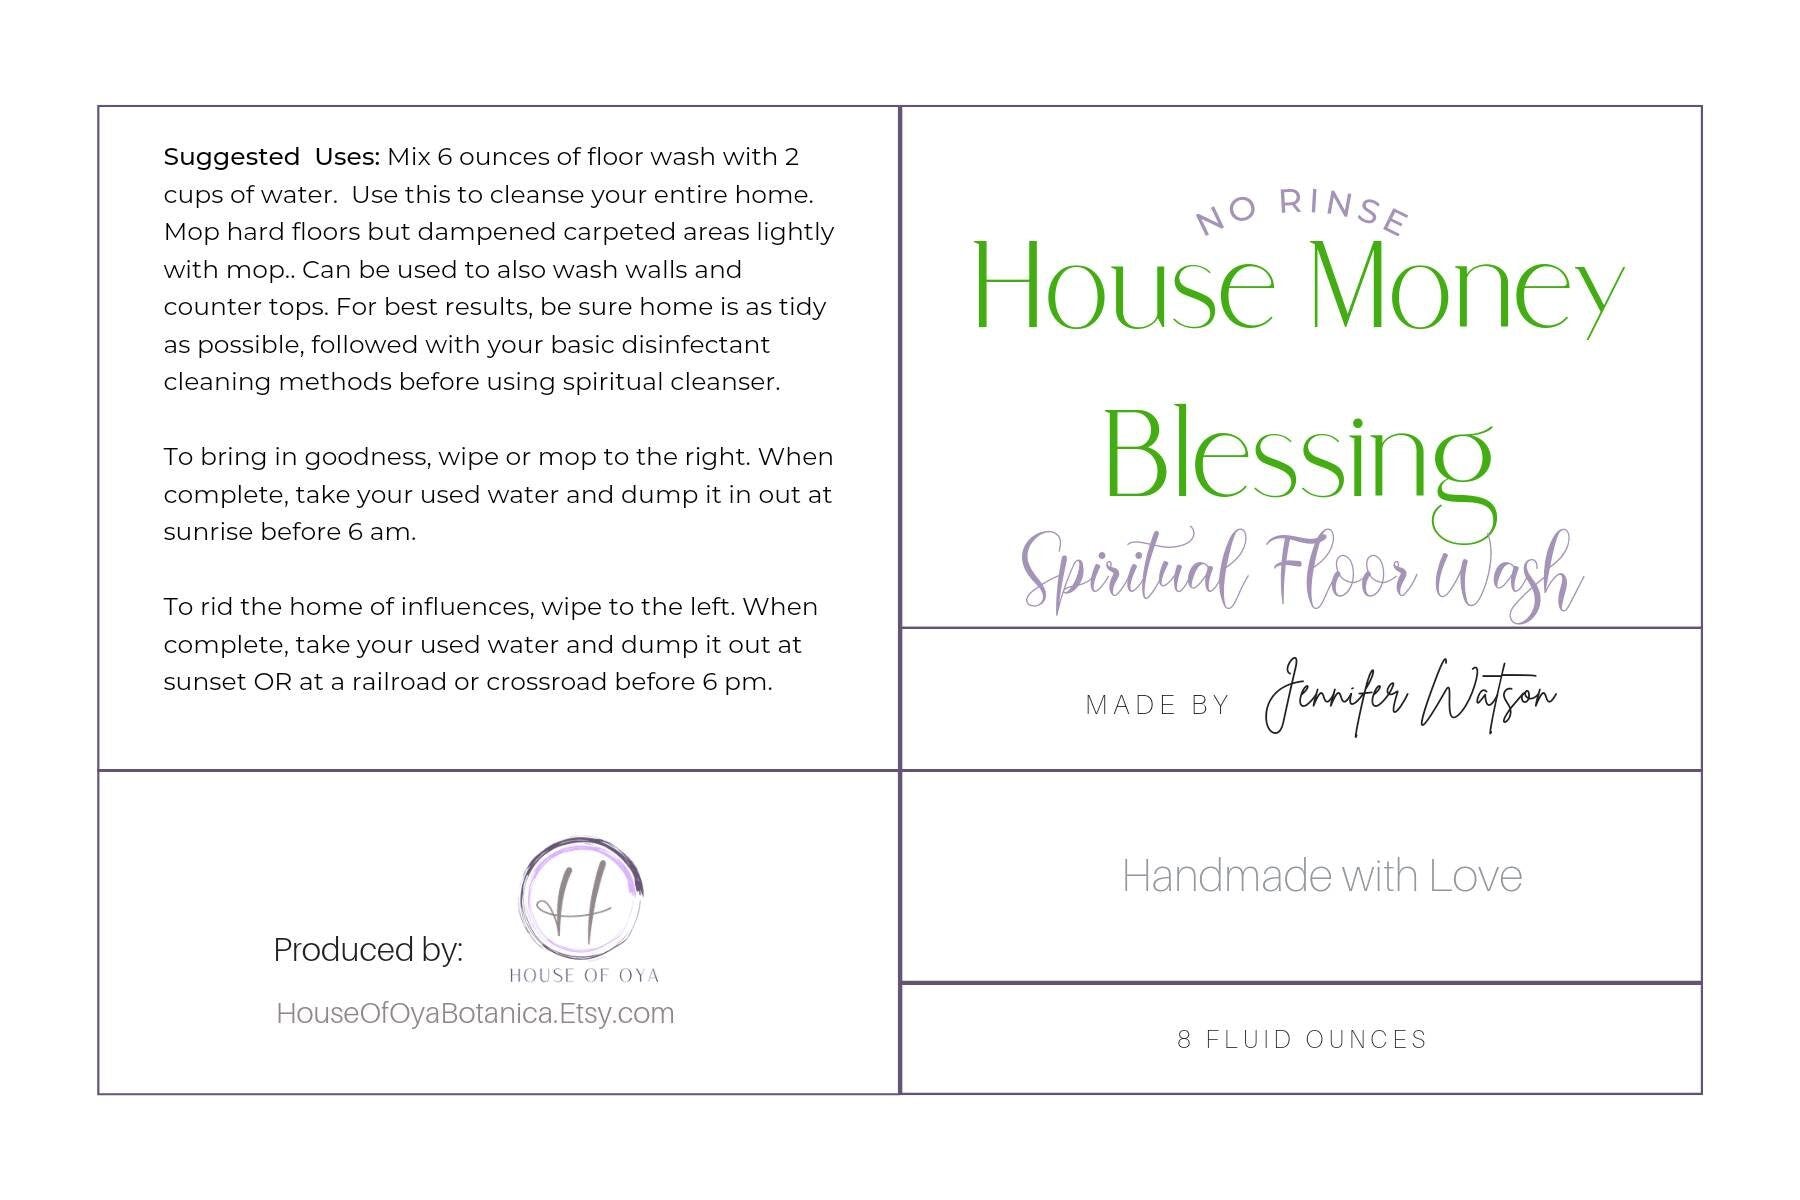 FLOOR WASH, House Money, Blessing Spiritual, Ritual No Rinse, Floor Wash, 8 oz